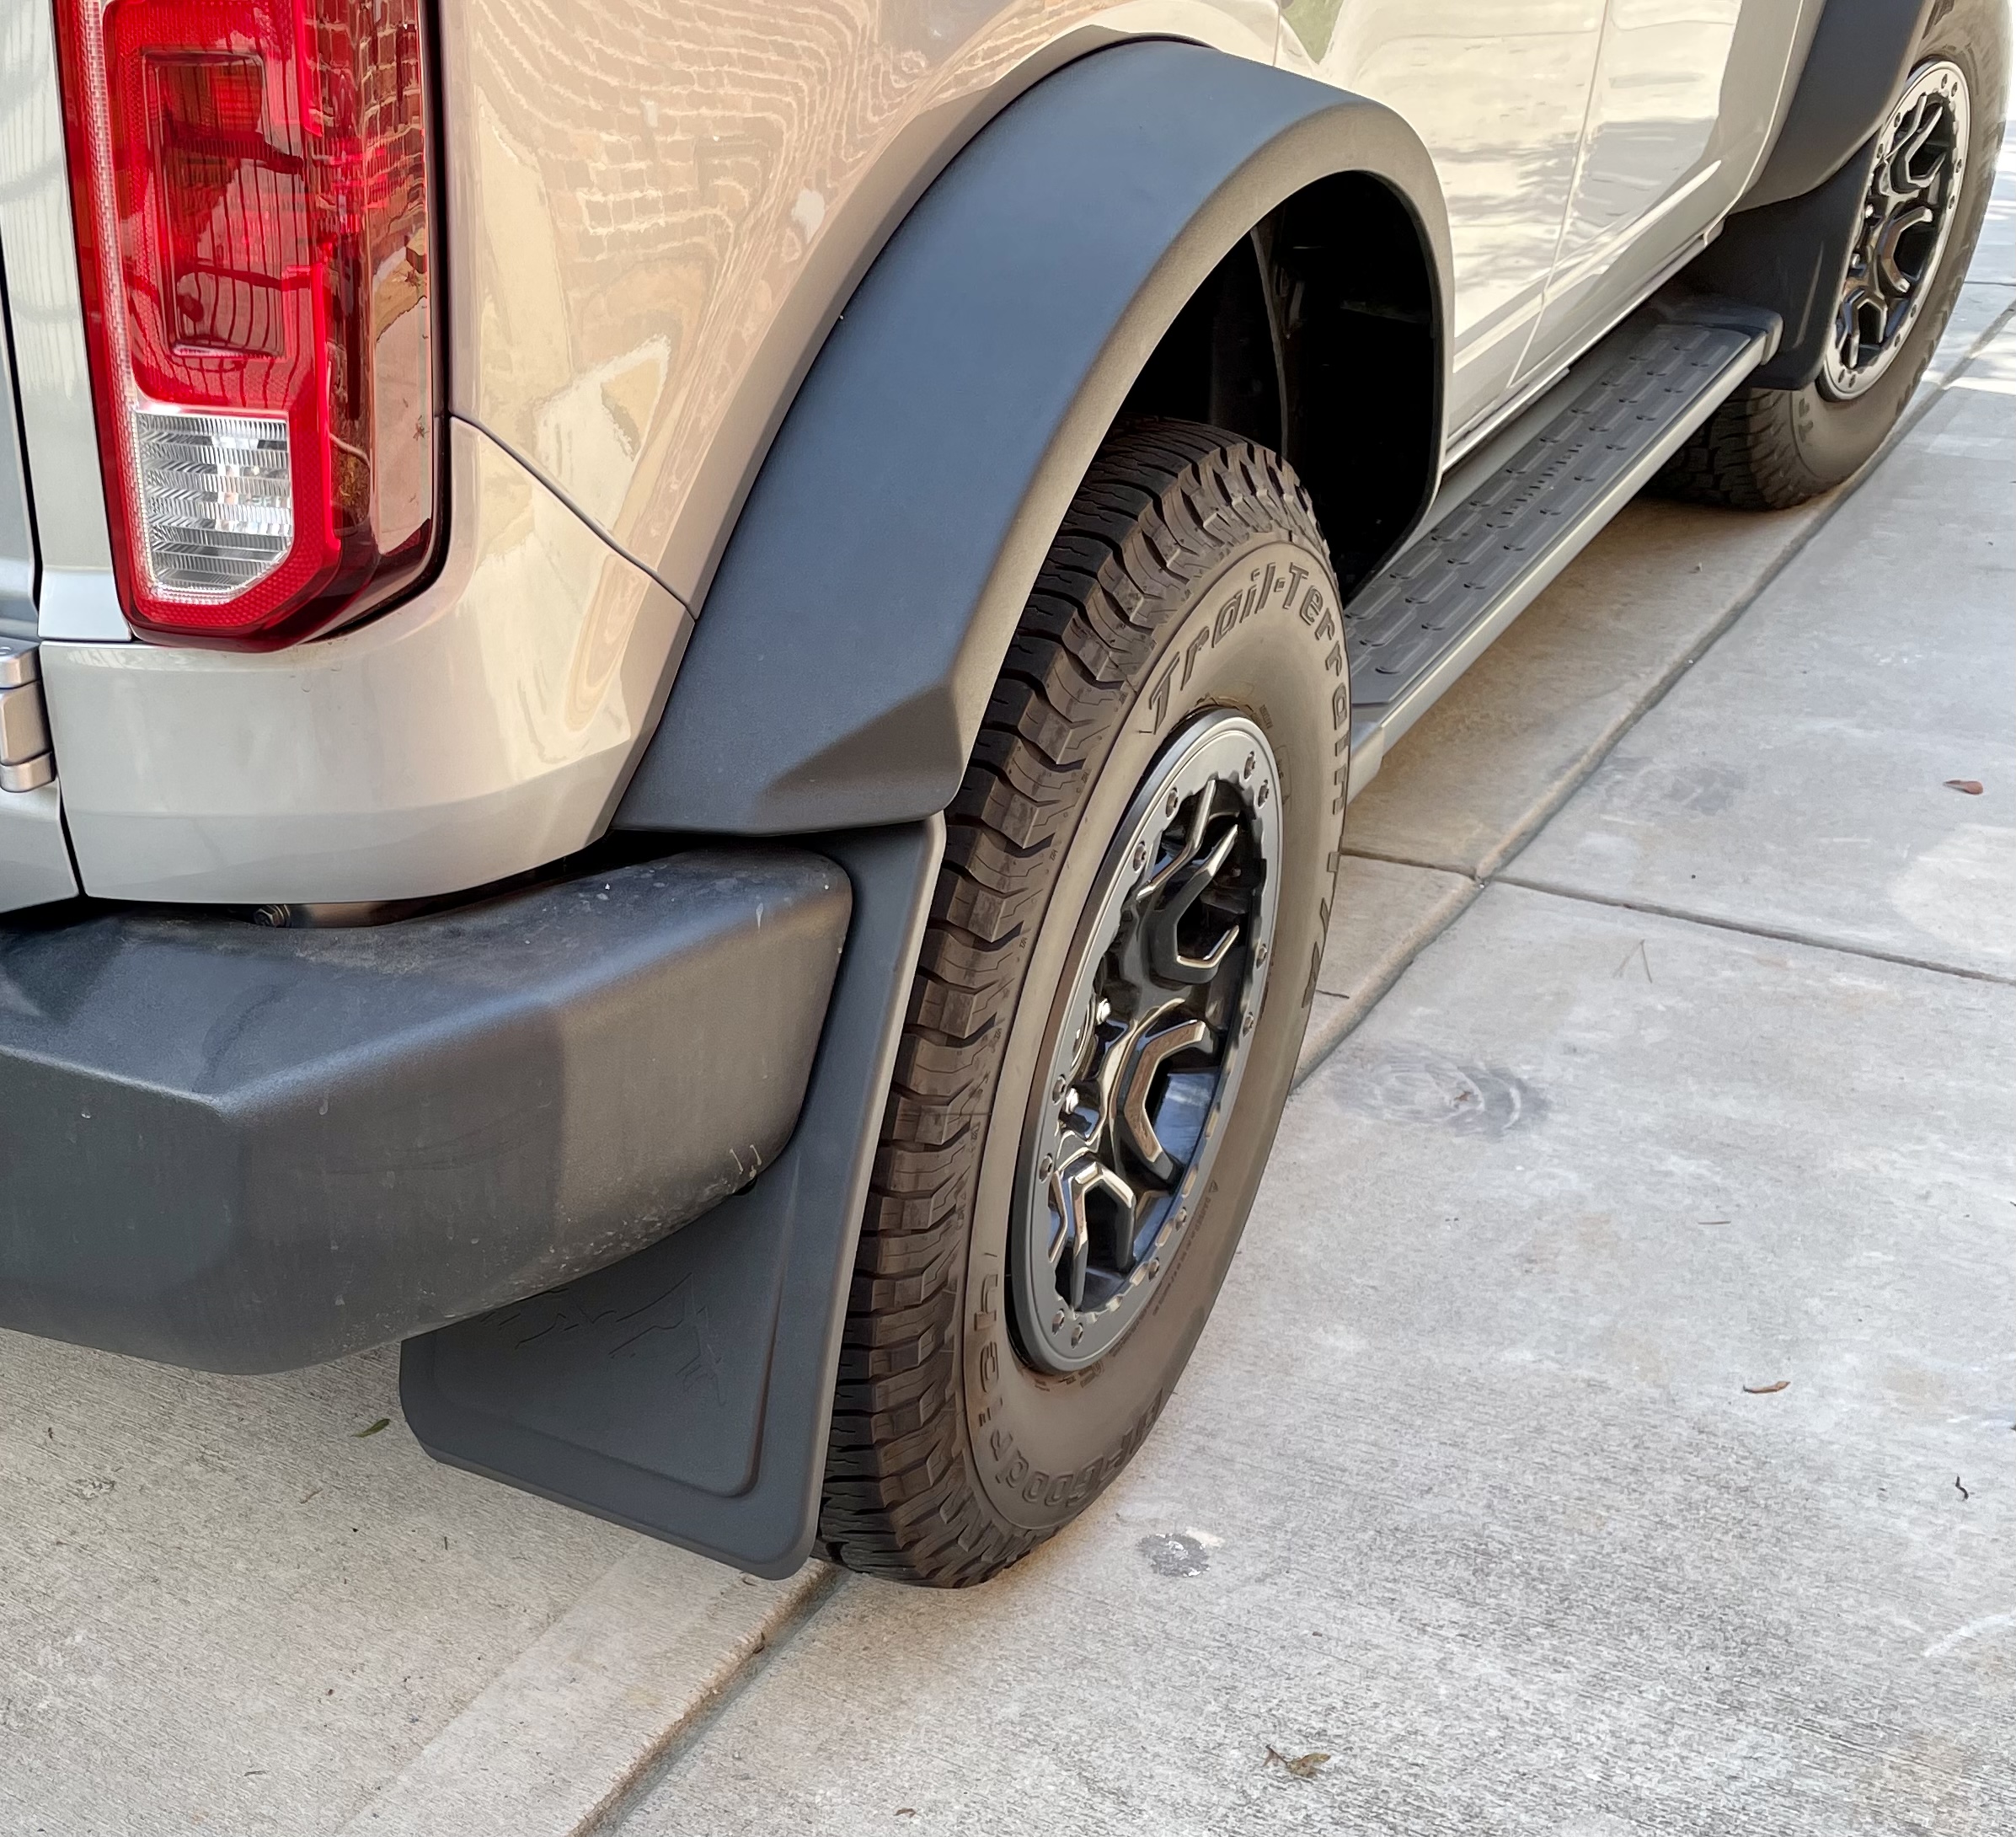 Ford Bronco Mabett front mud flaps installed 368DAAEE-70D7-4157-B08A-10BA963644D4